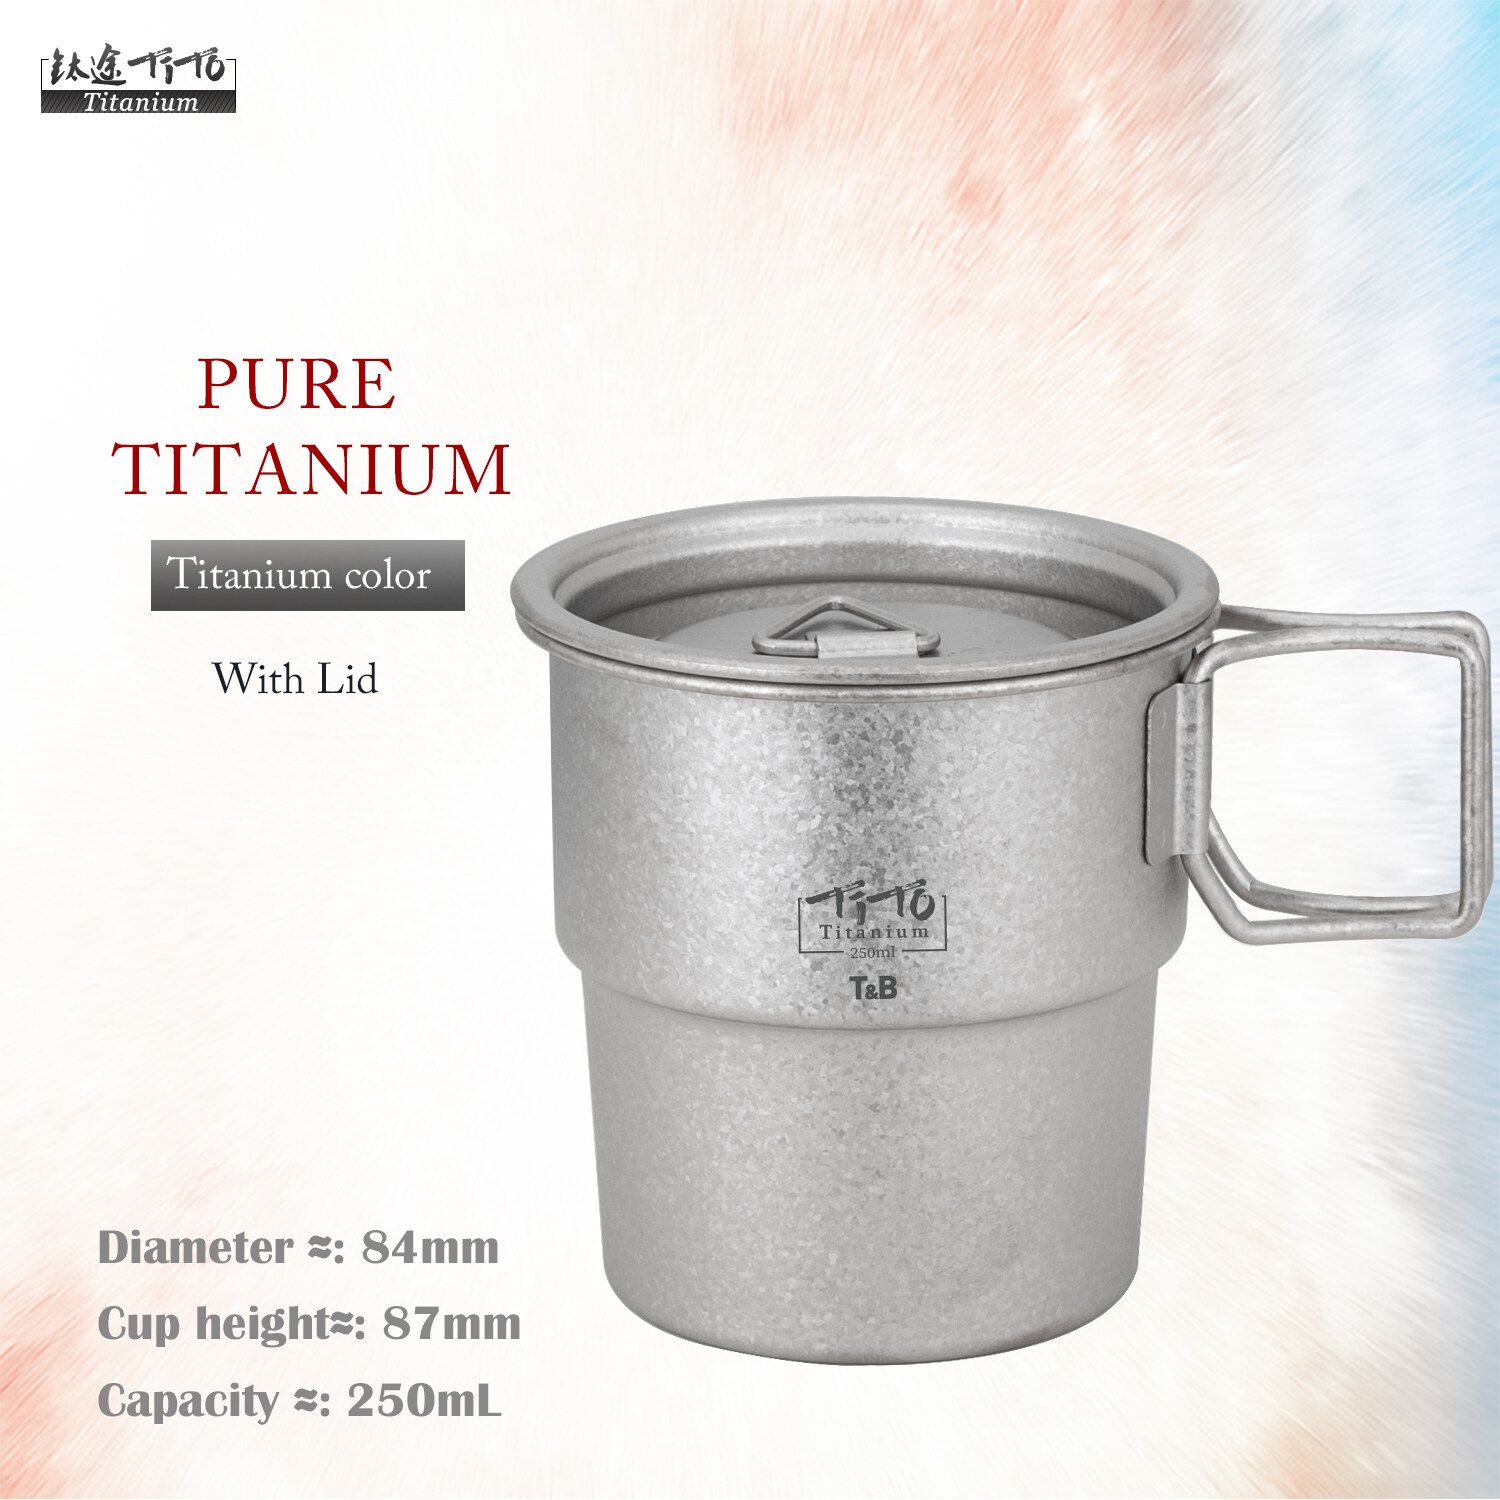 Titanium color with lid